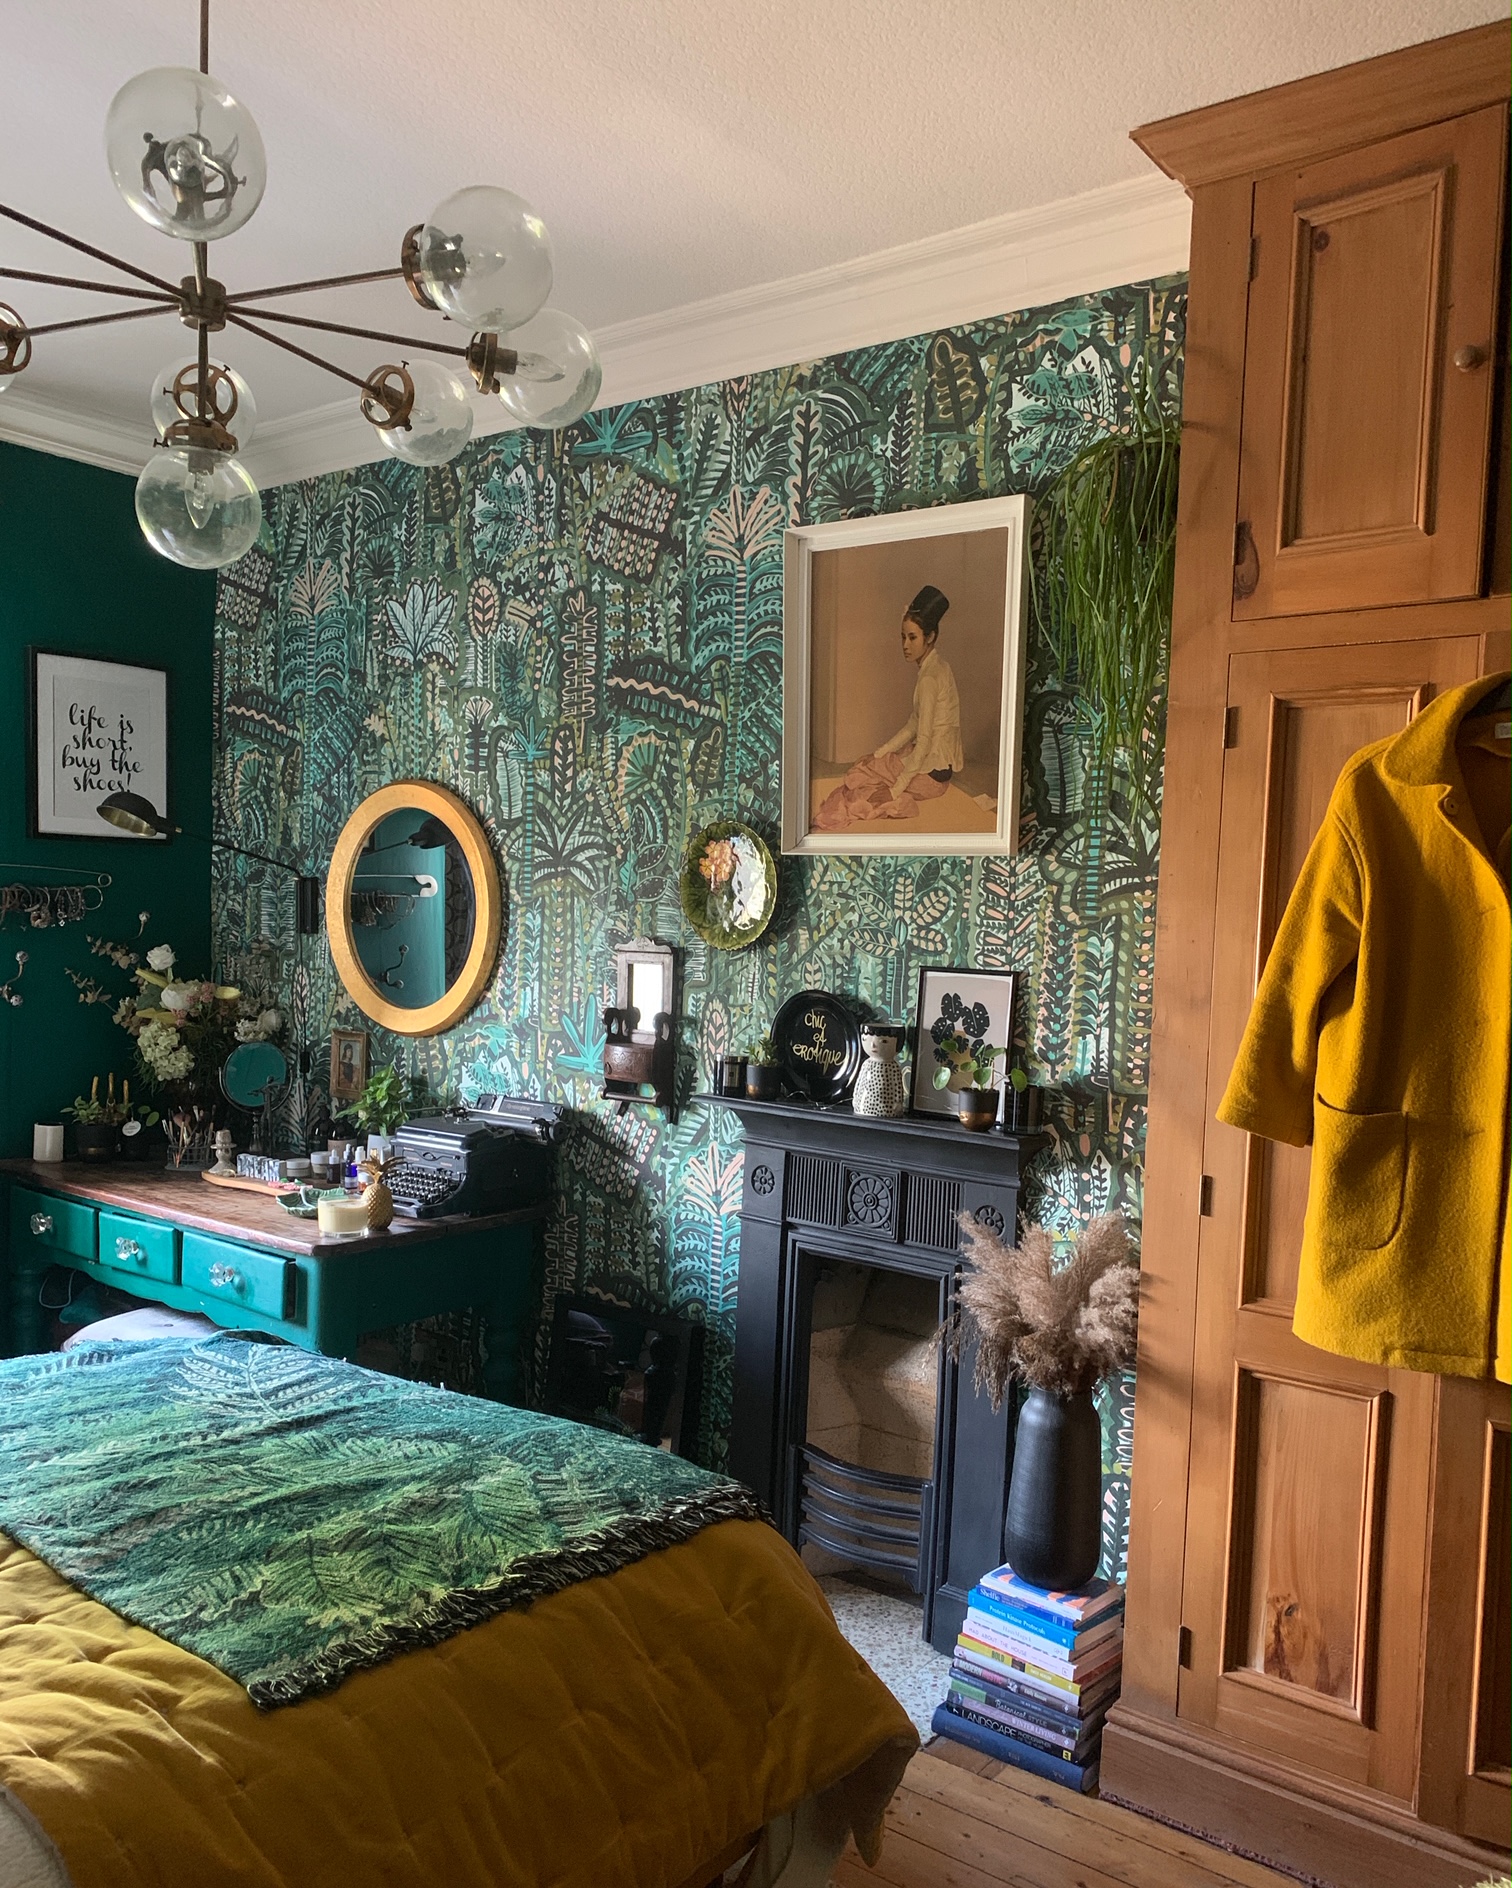 The dreamiest, greeniest bedroom